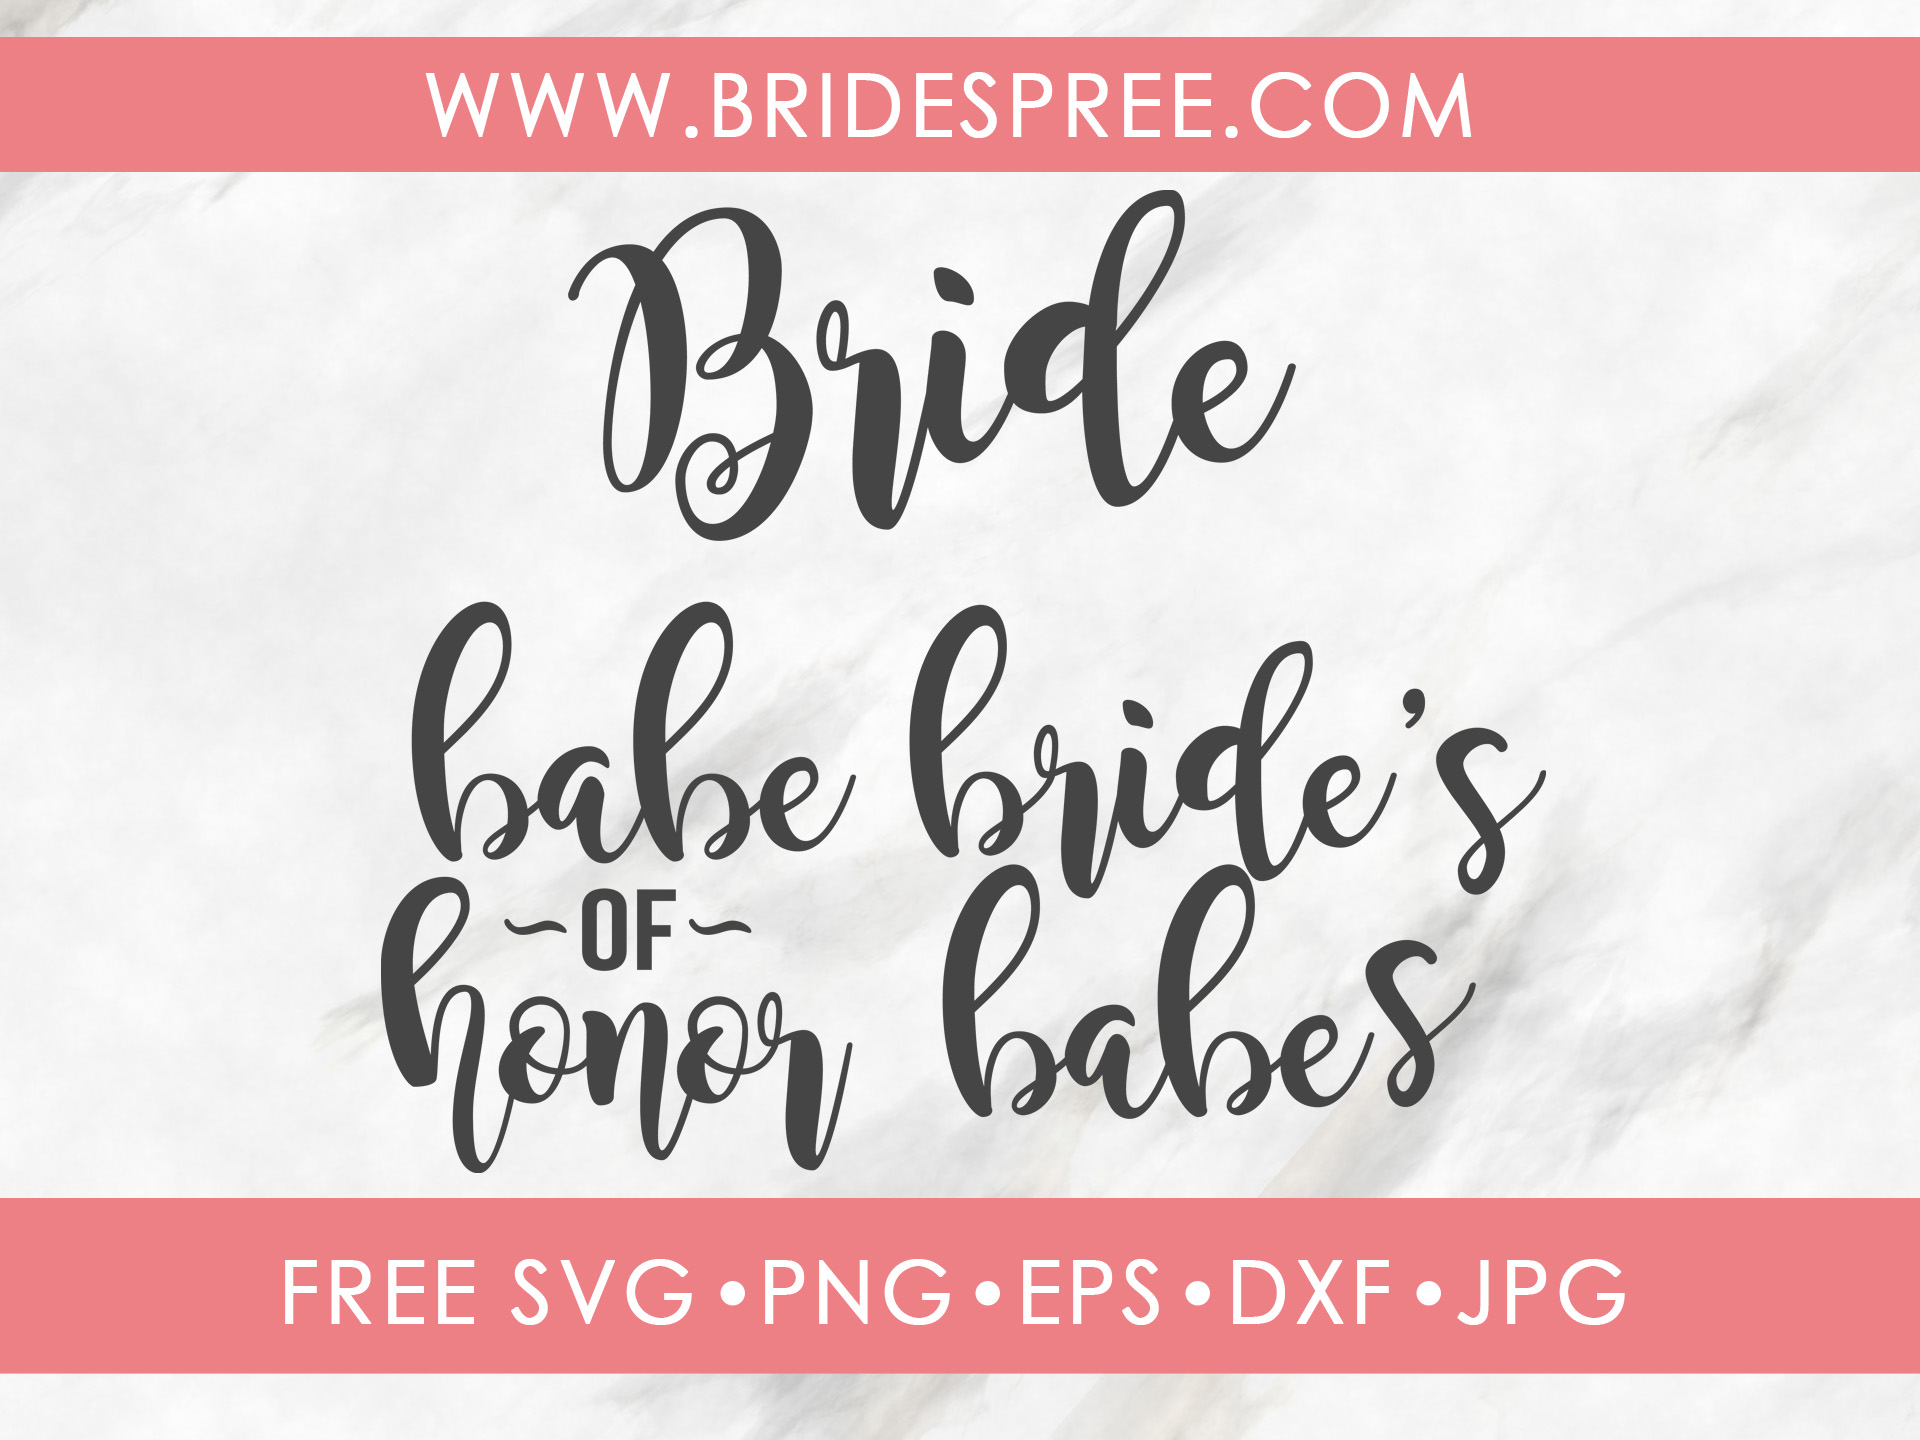 Download Free Wedding Svg Files Archives Bridespree